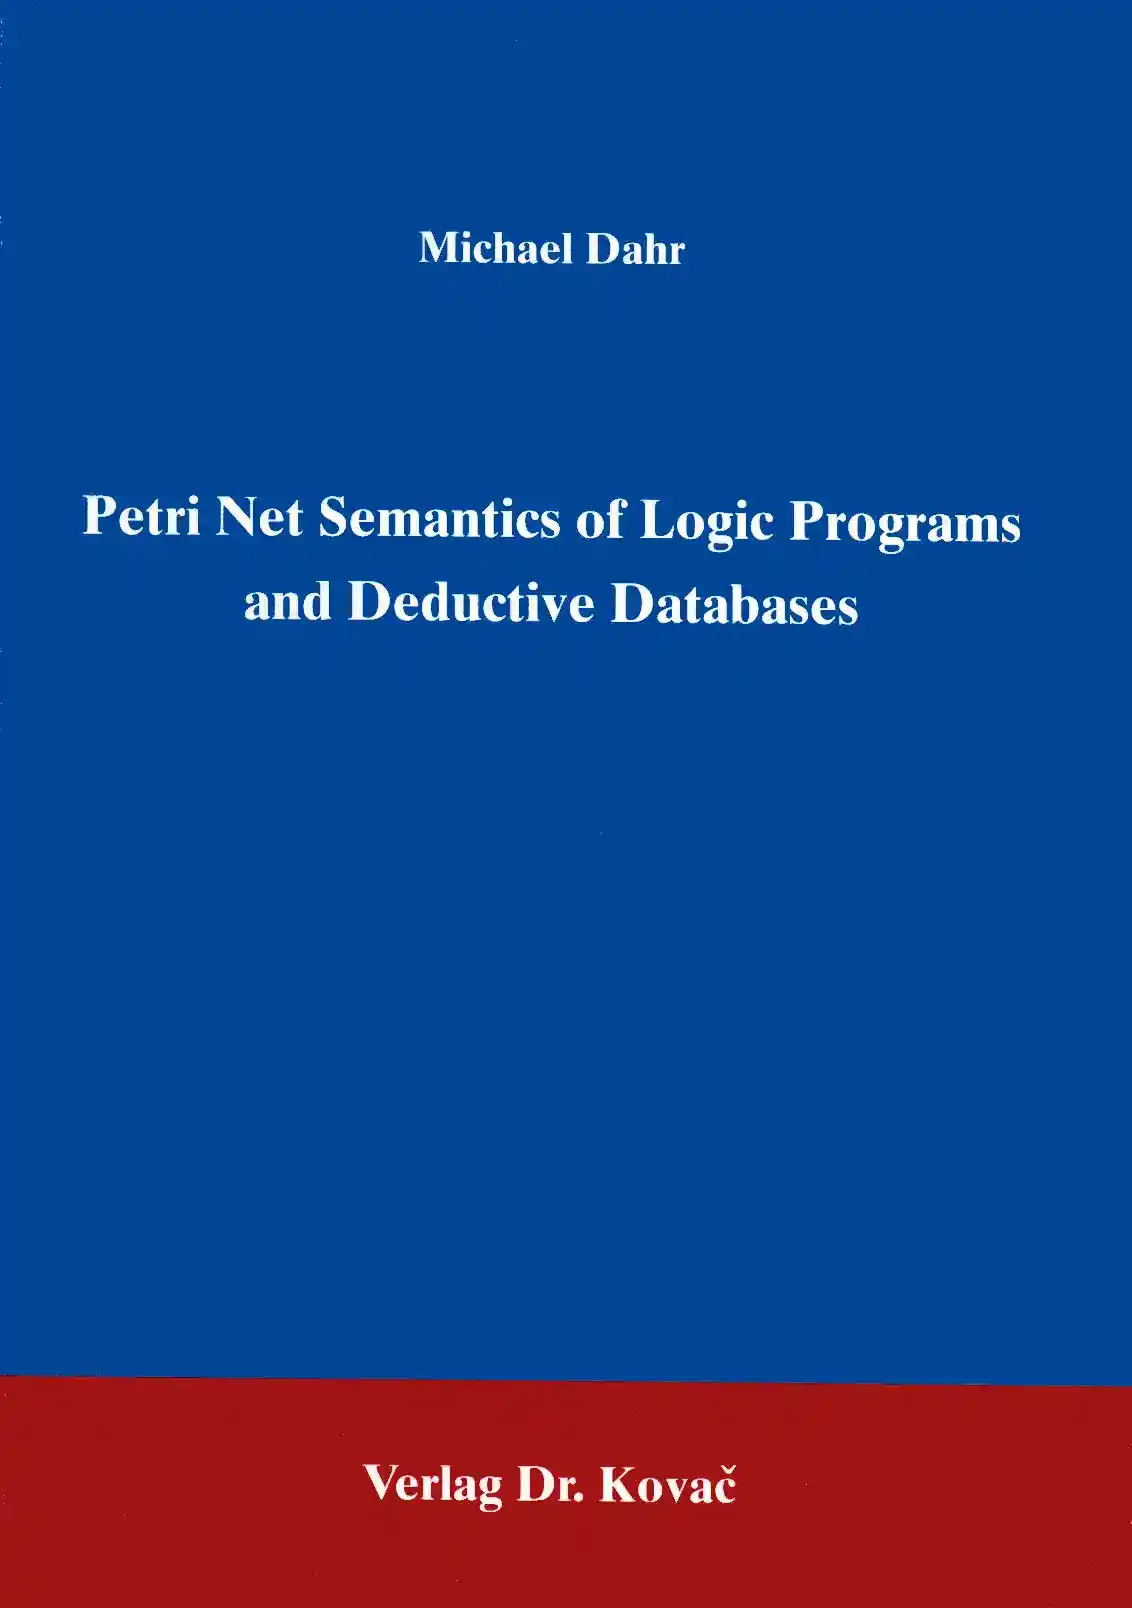 : Petri Net Semantics of Logic Programs and Deductive Databases